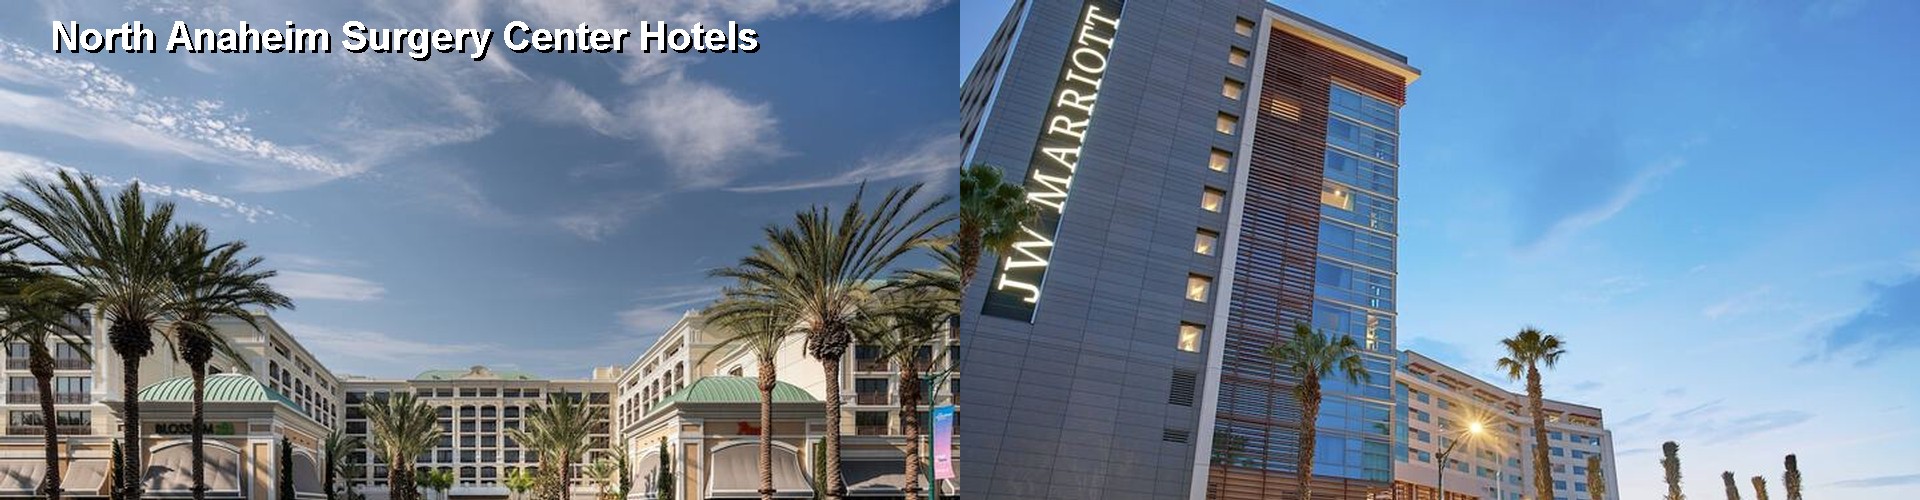 5 Best Hotels near North Anaheim Surgery Center